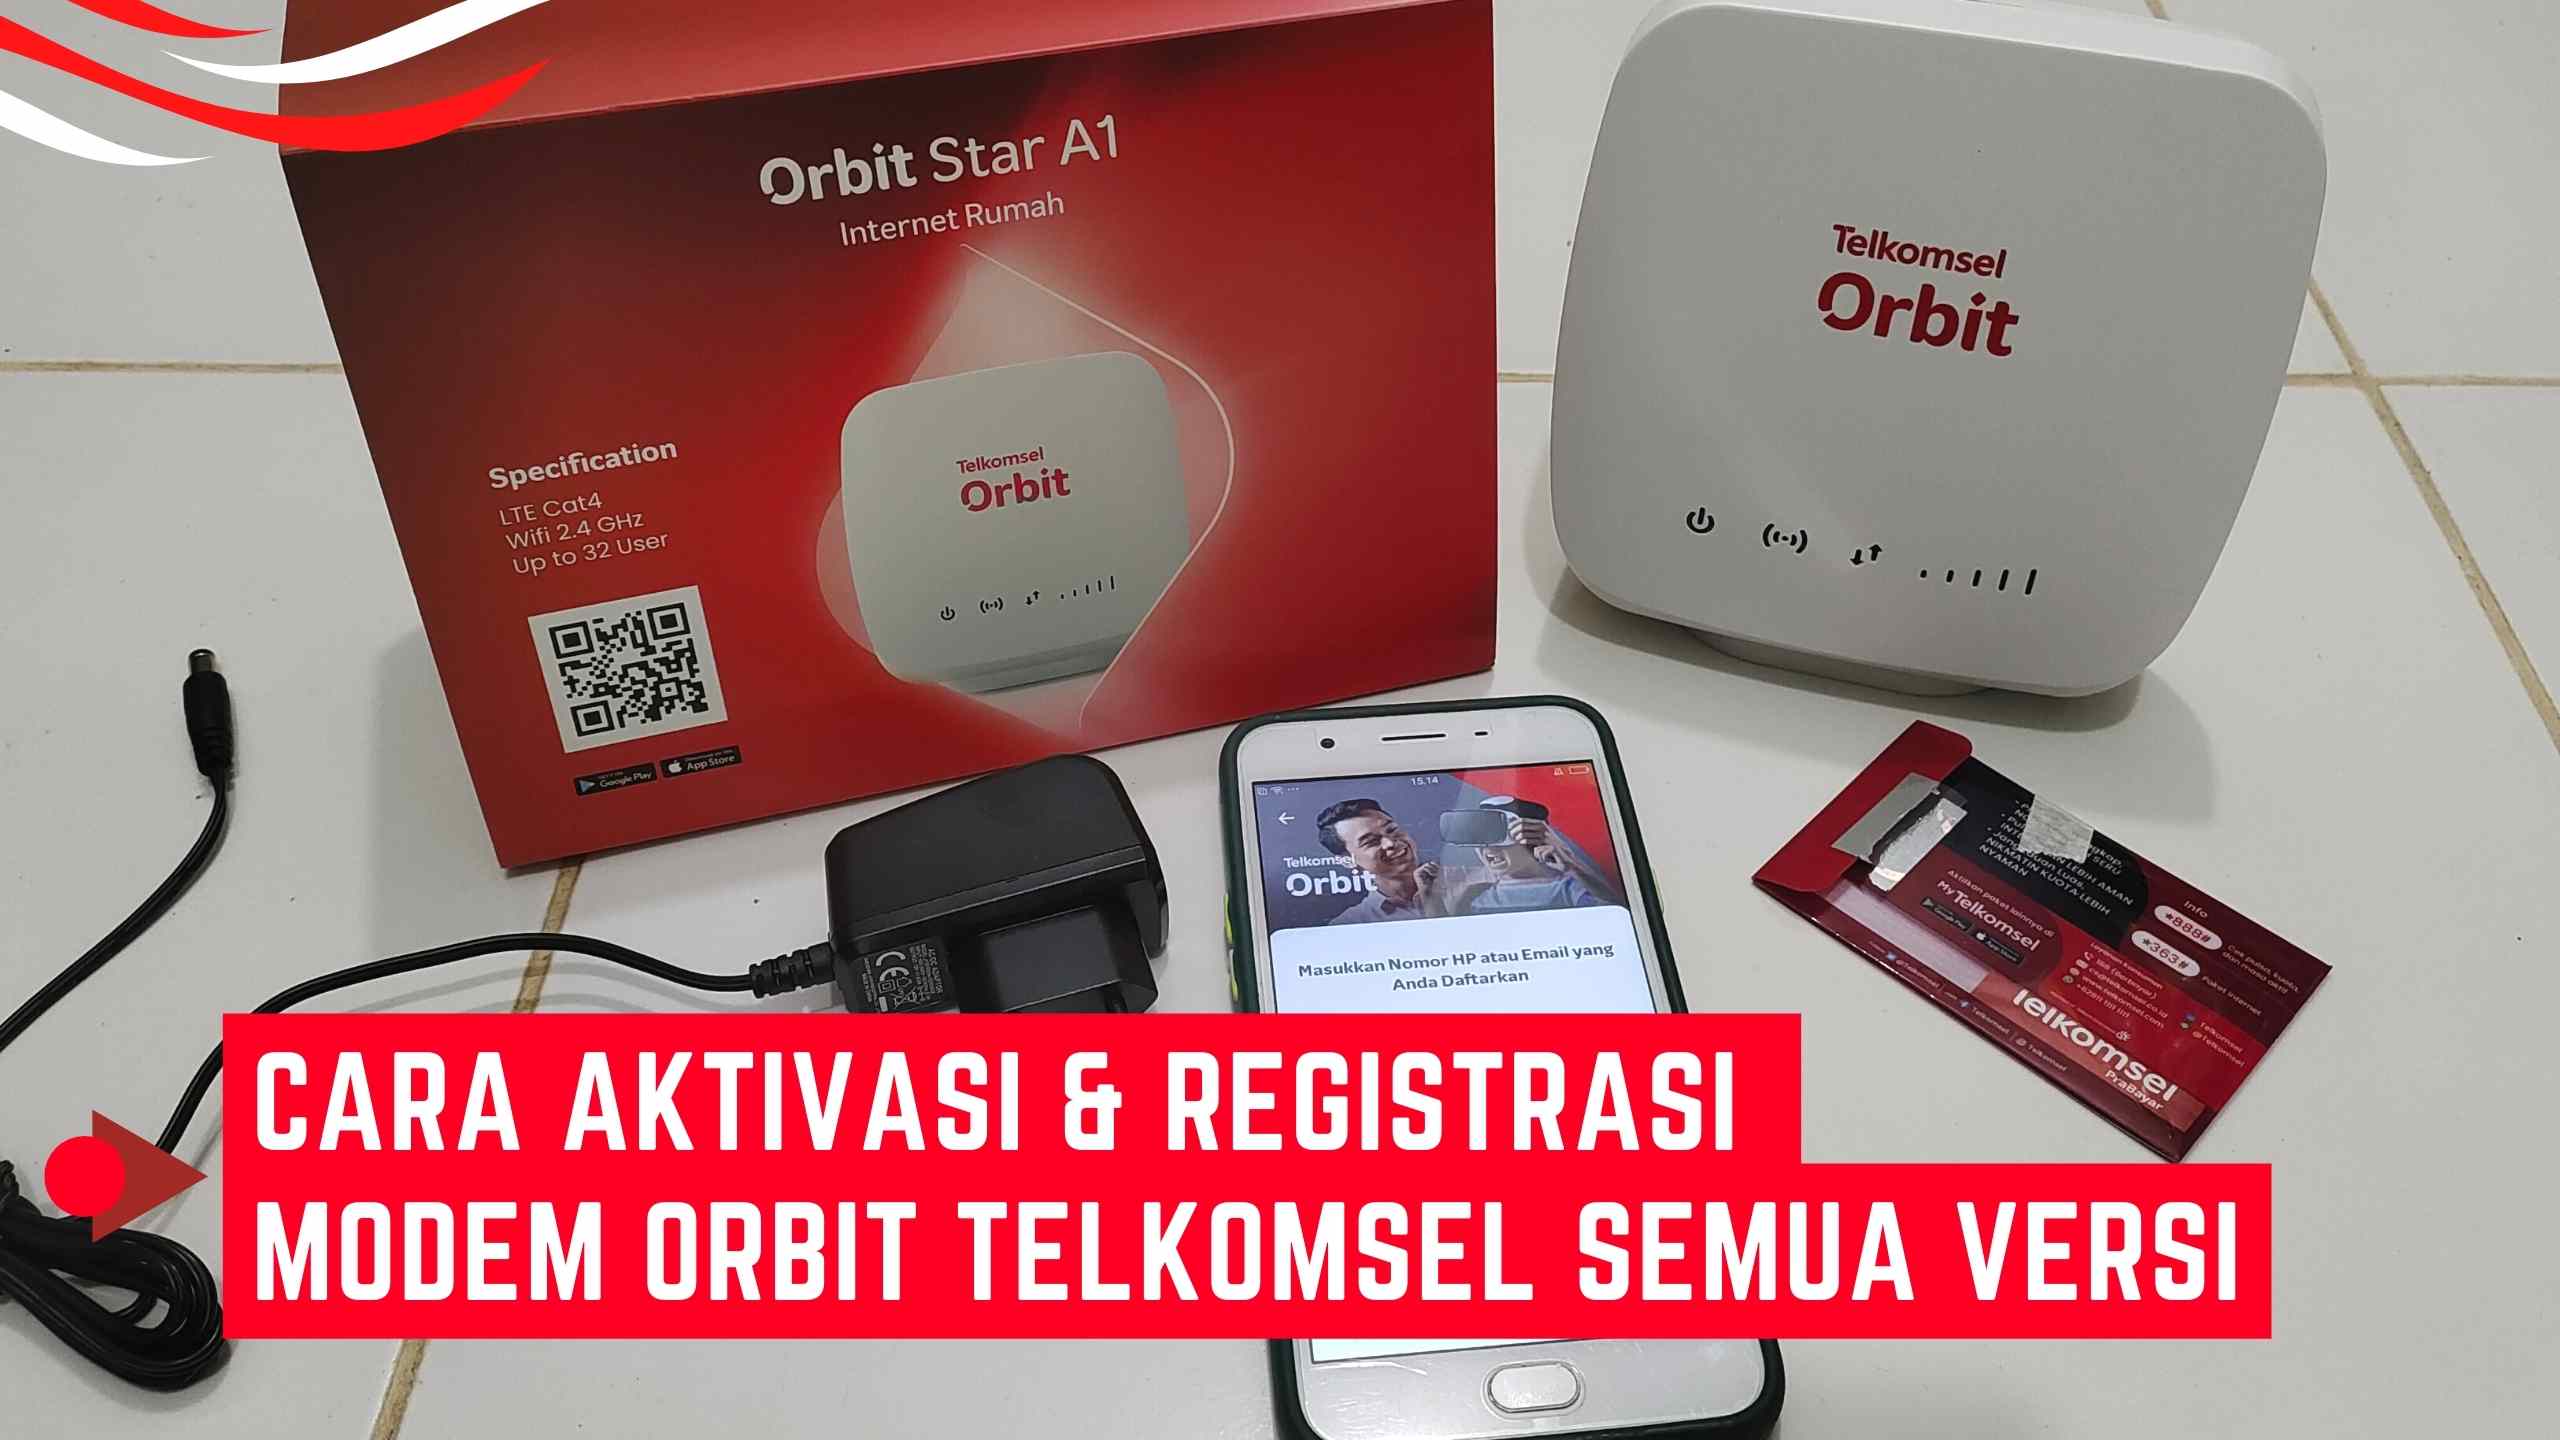 Registrasi Kartu Modem Orbit Telkomsel